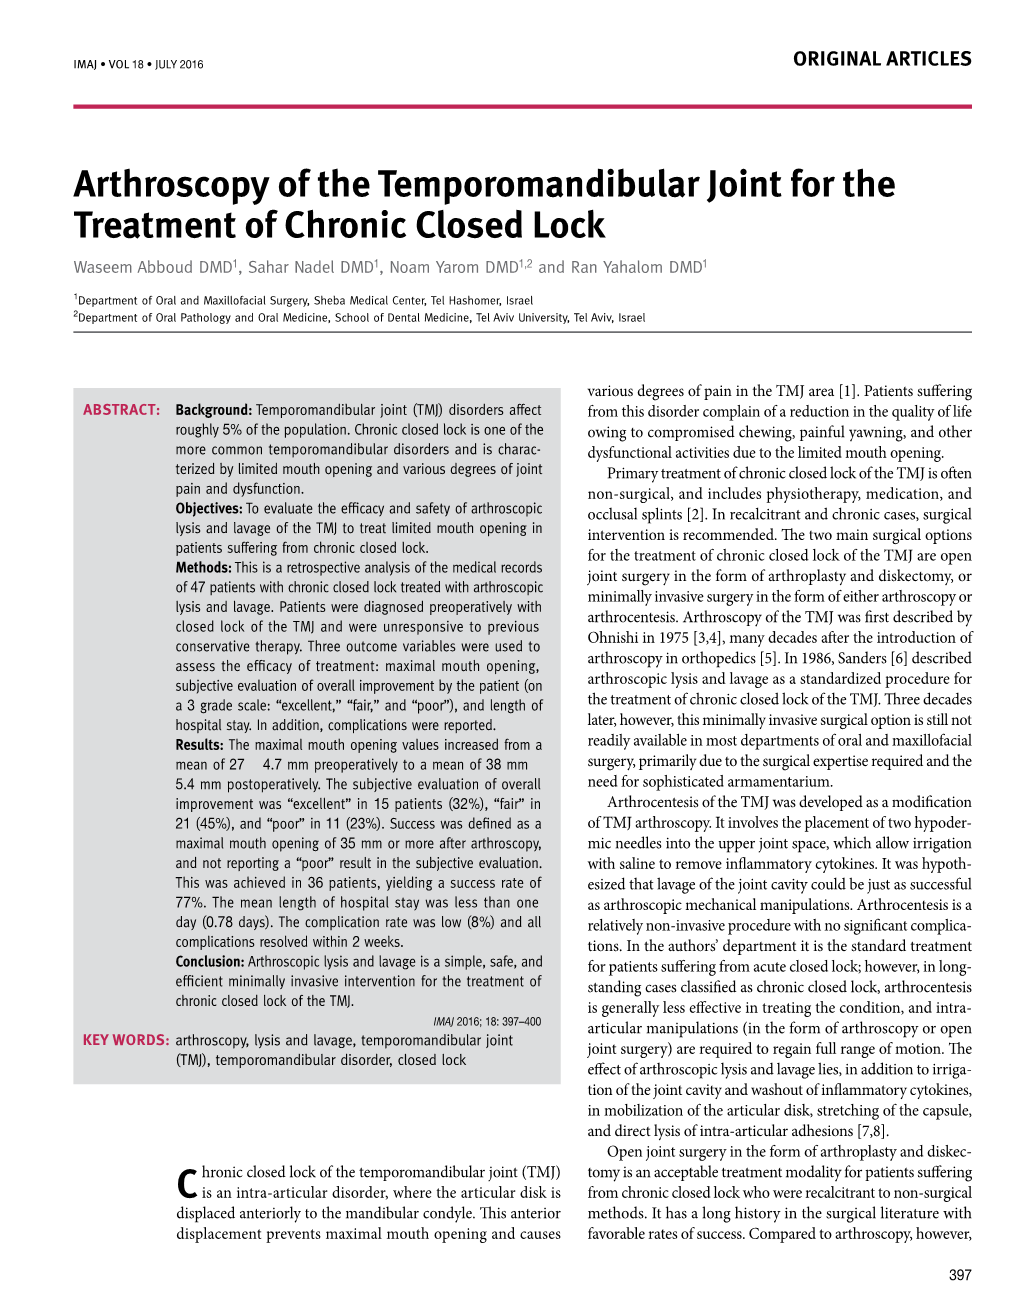 Arthroscopy of the Temporomandibular Joint for the Treatment of Chronic Closed Lock Waseem Abboud DMD1, Sahar Nadel DMD1, Noam Yarom DMD1,2 and Ran Yahalom DMD1